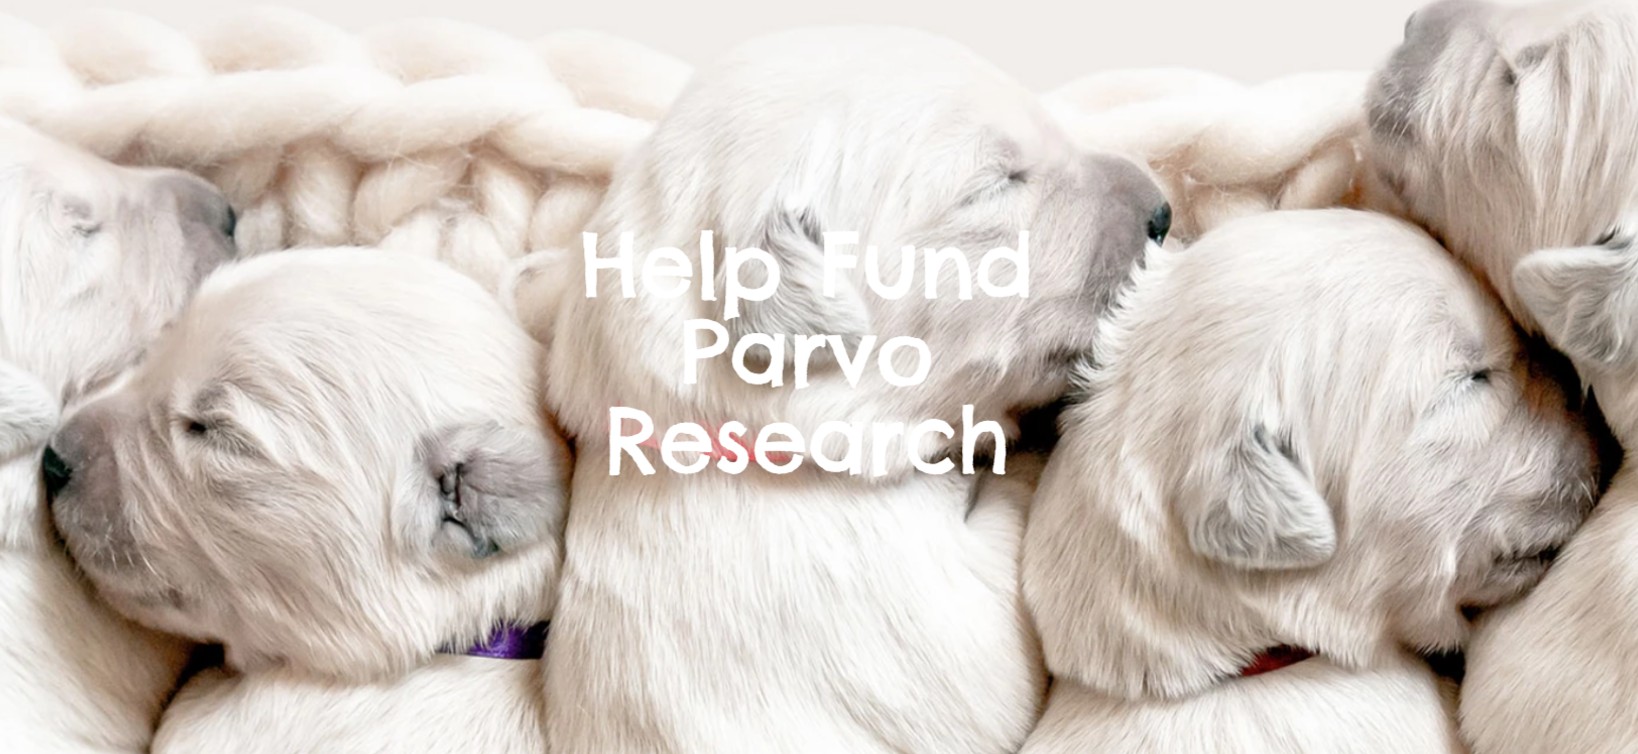 Revival Animal Health promotes Healthy Puppy Month, seeks to raise $20,000  for parvovirus research – Vibrant Orange City, Iowa